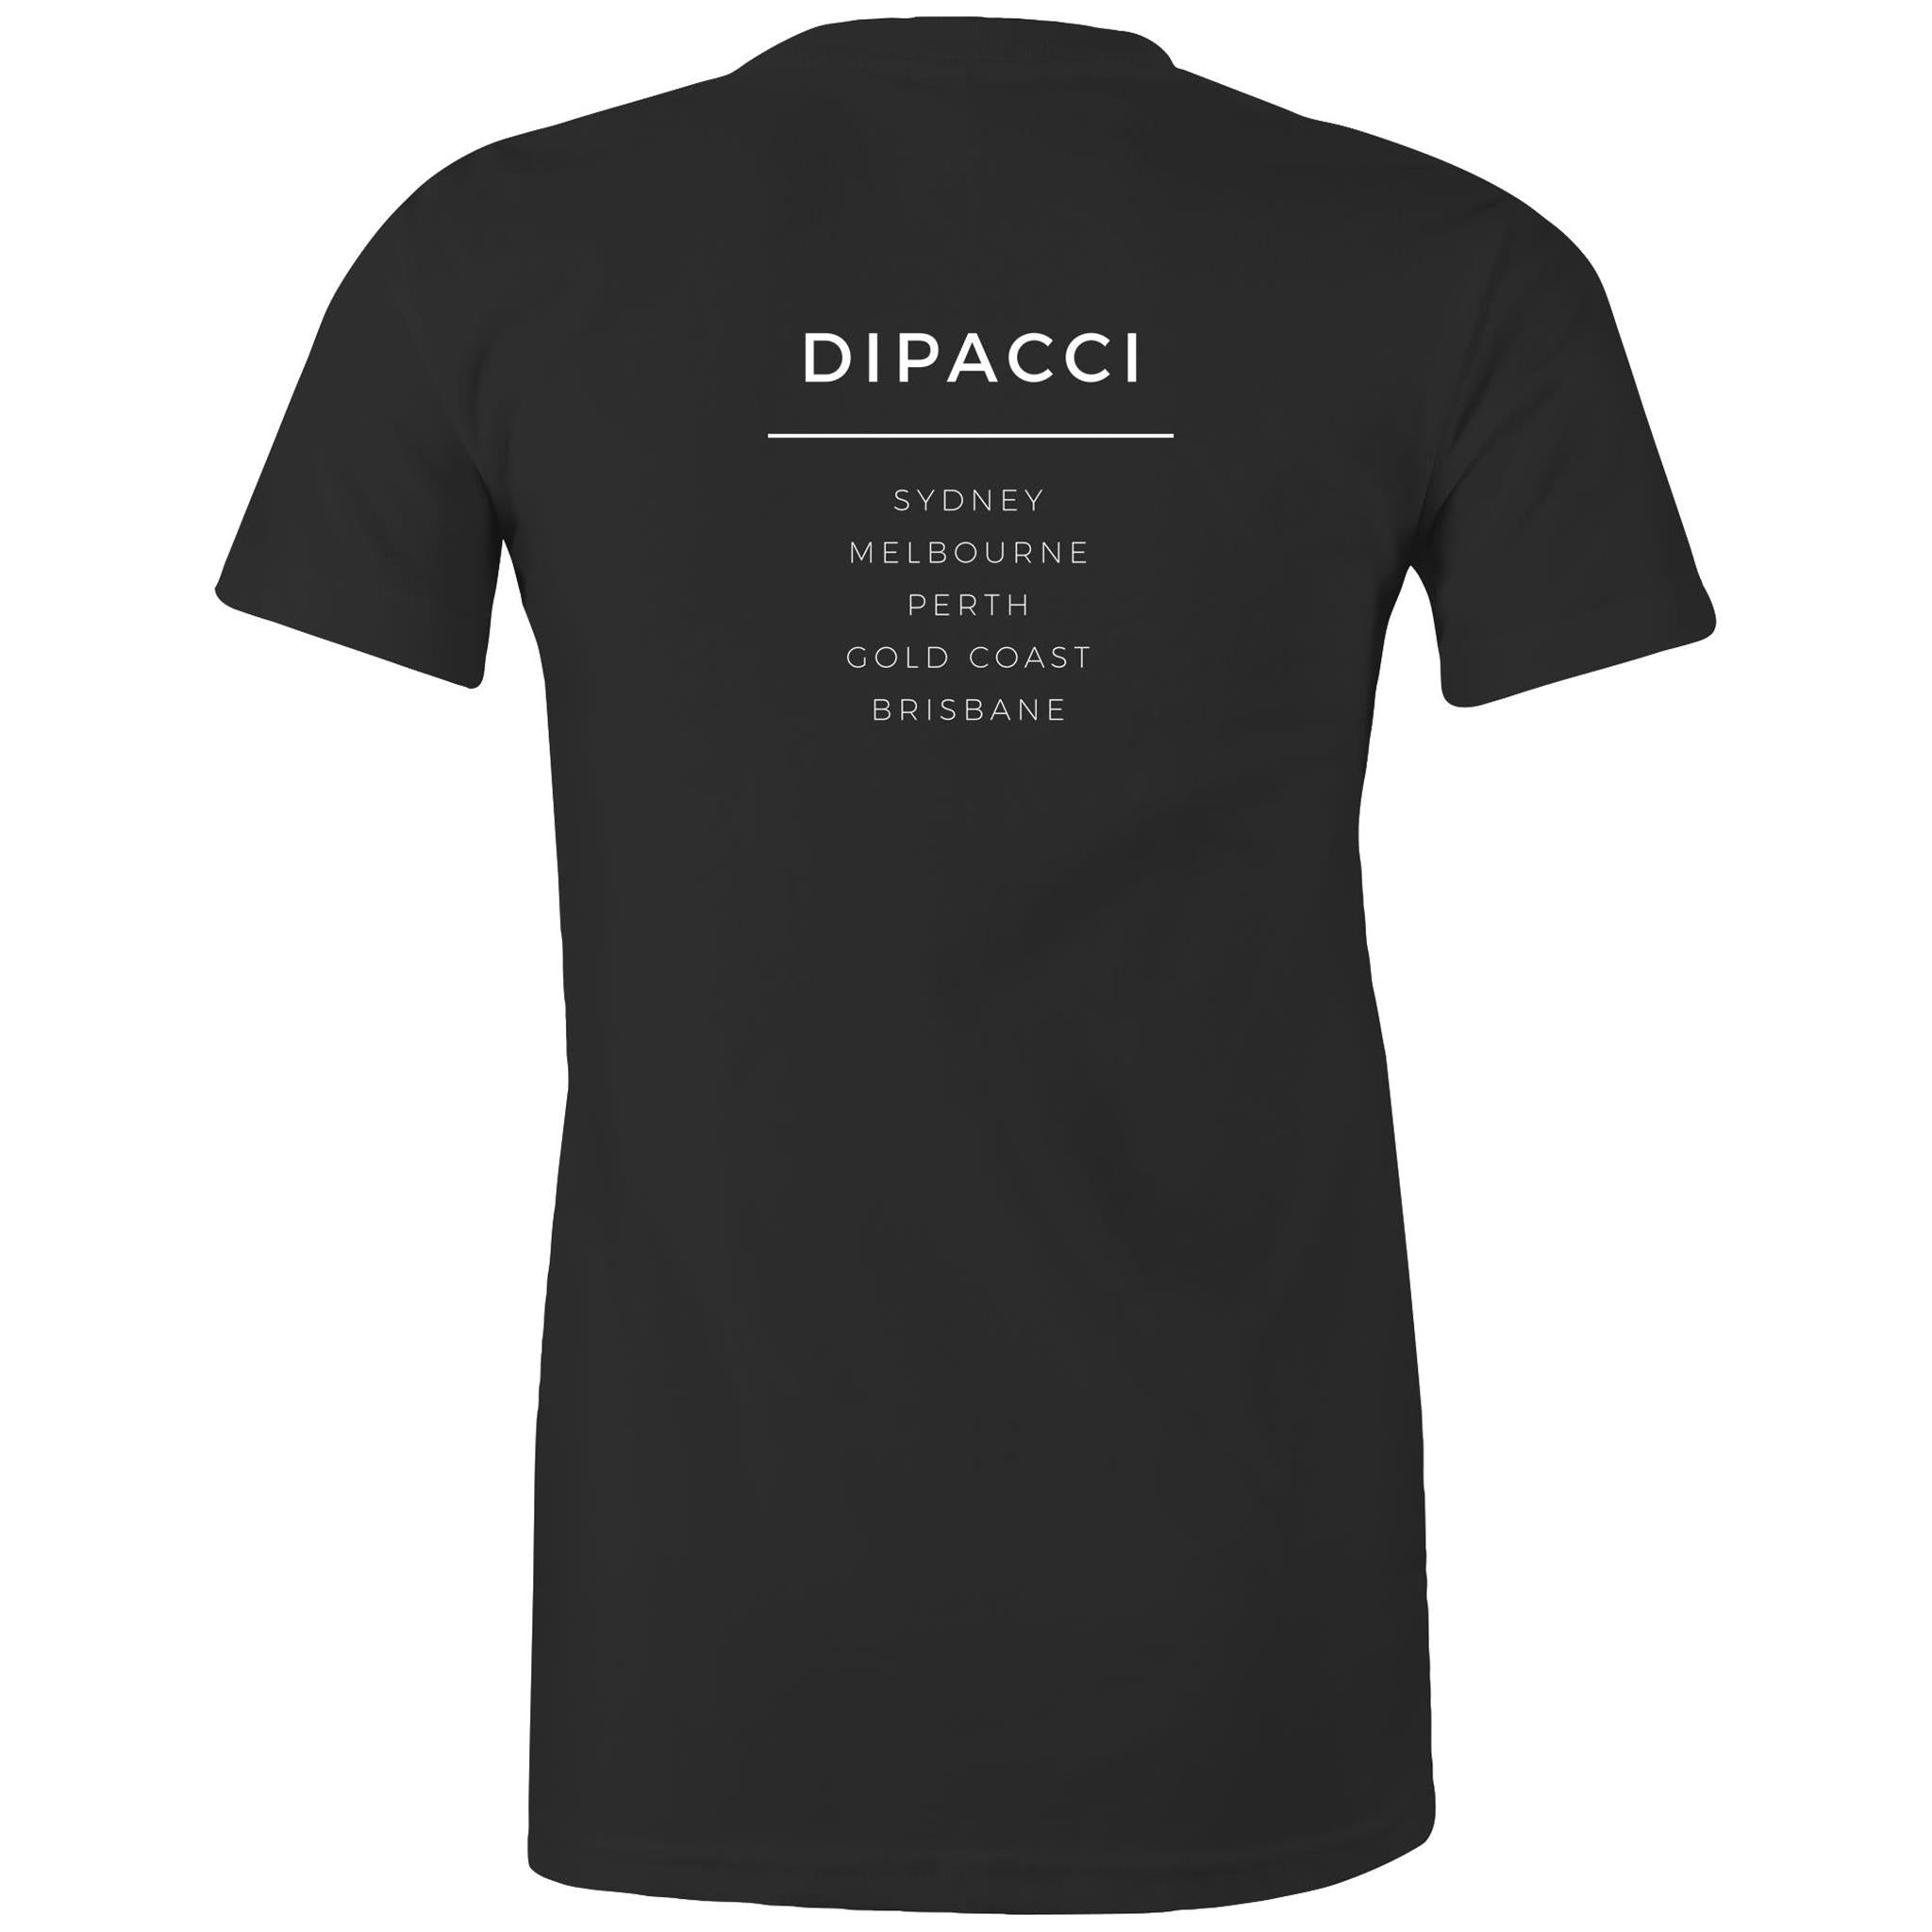 Dipacci - Women's Maple Tee